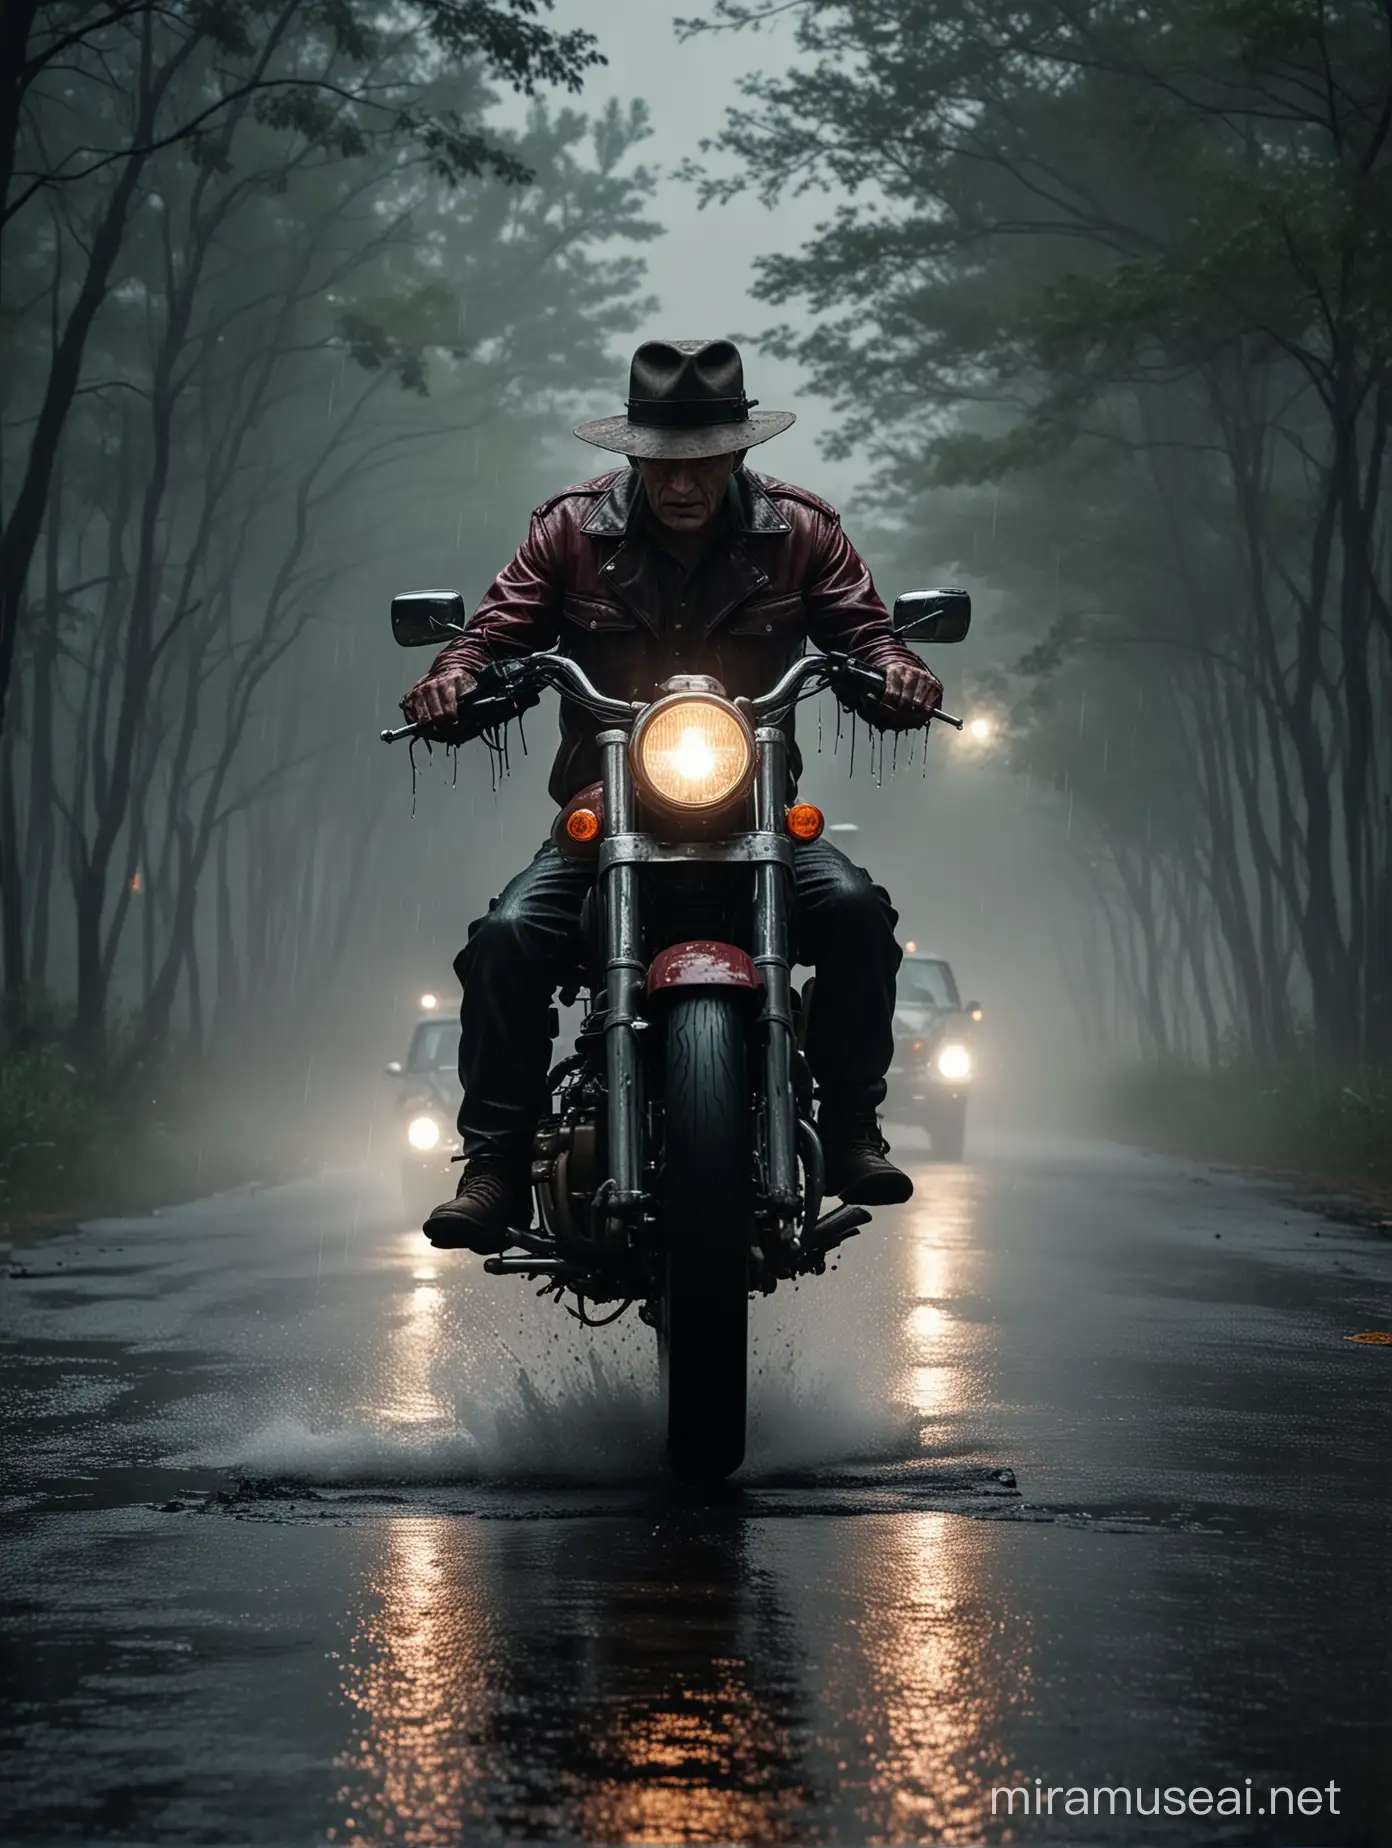 Freddy Krueger Riding Classic Motorcycle Through Rainy Night Forest